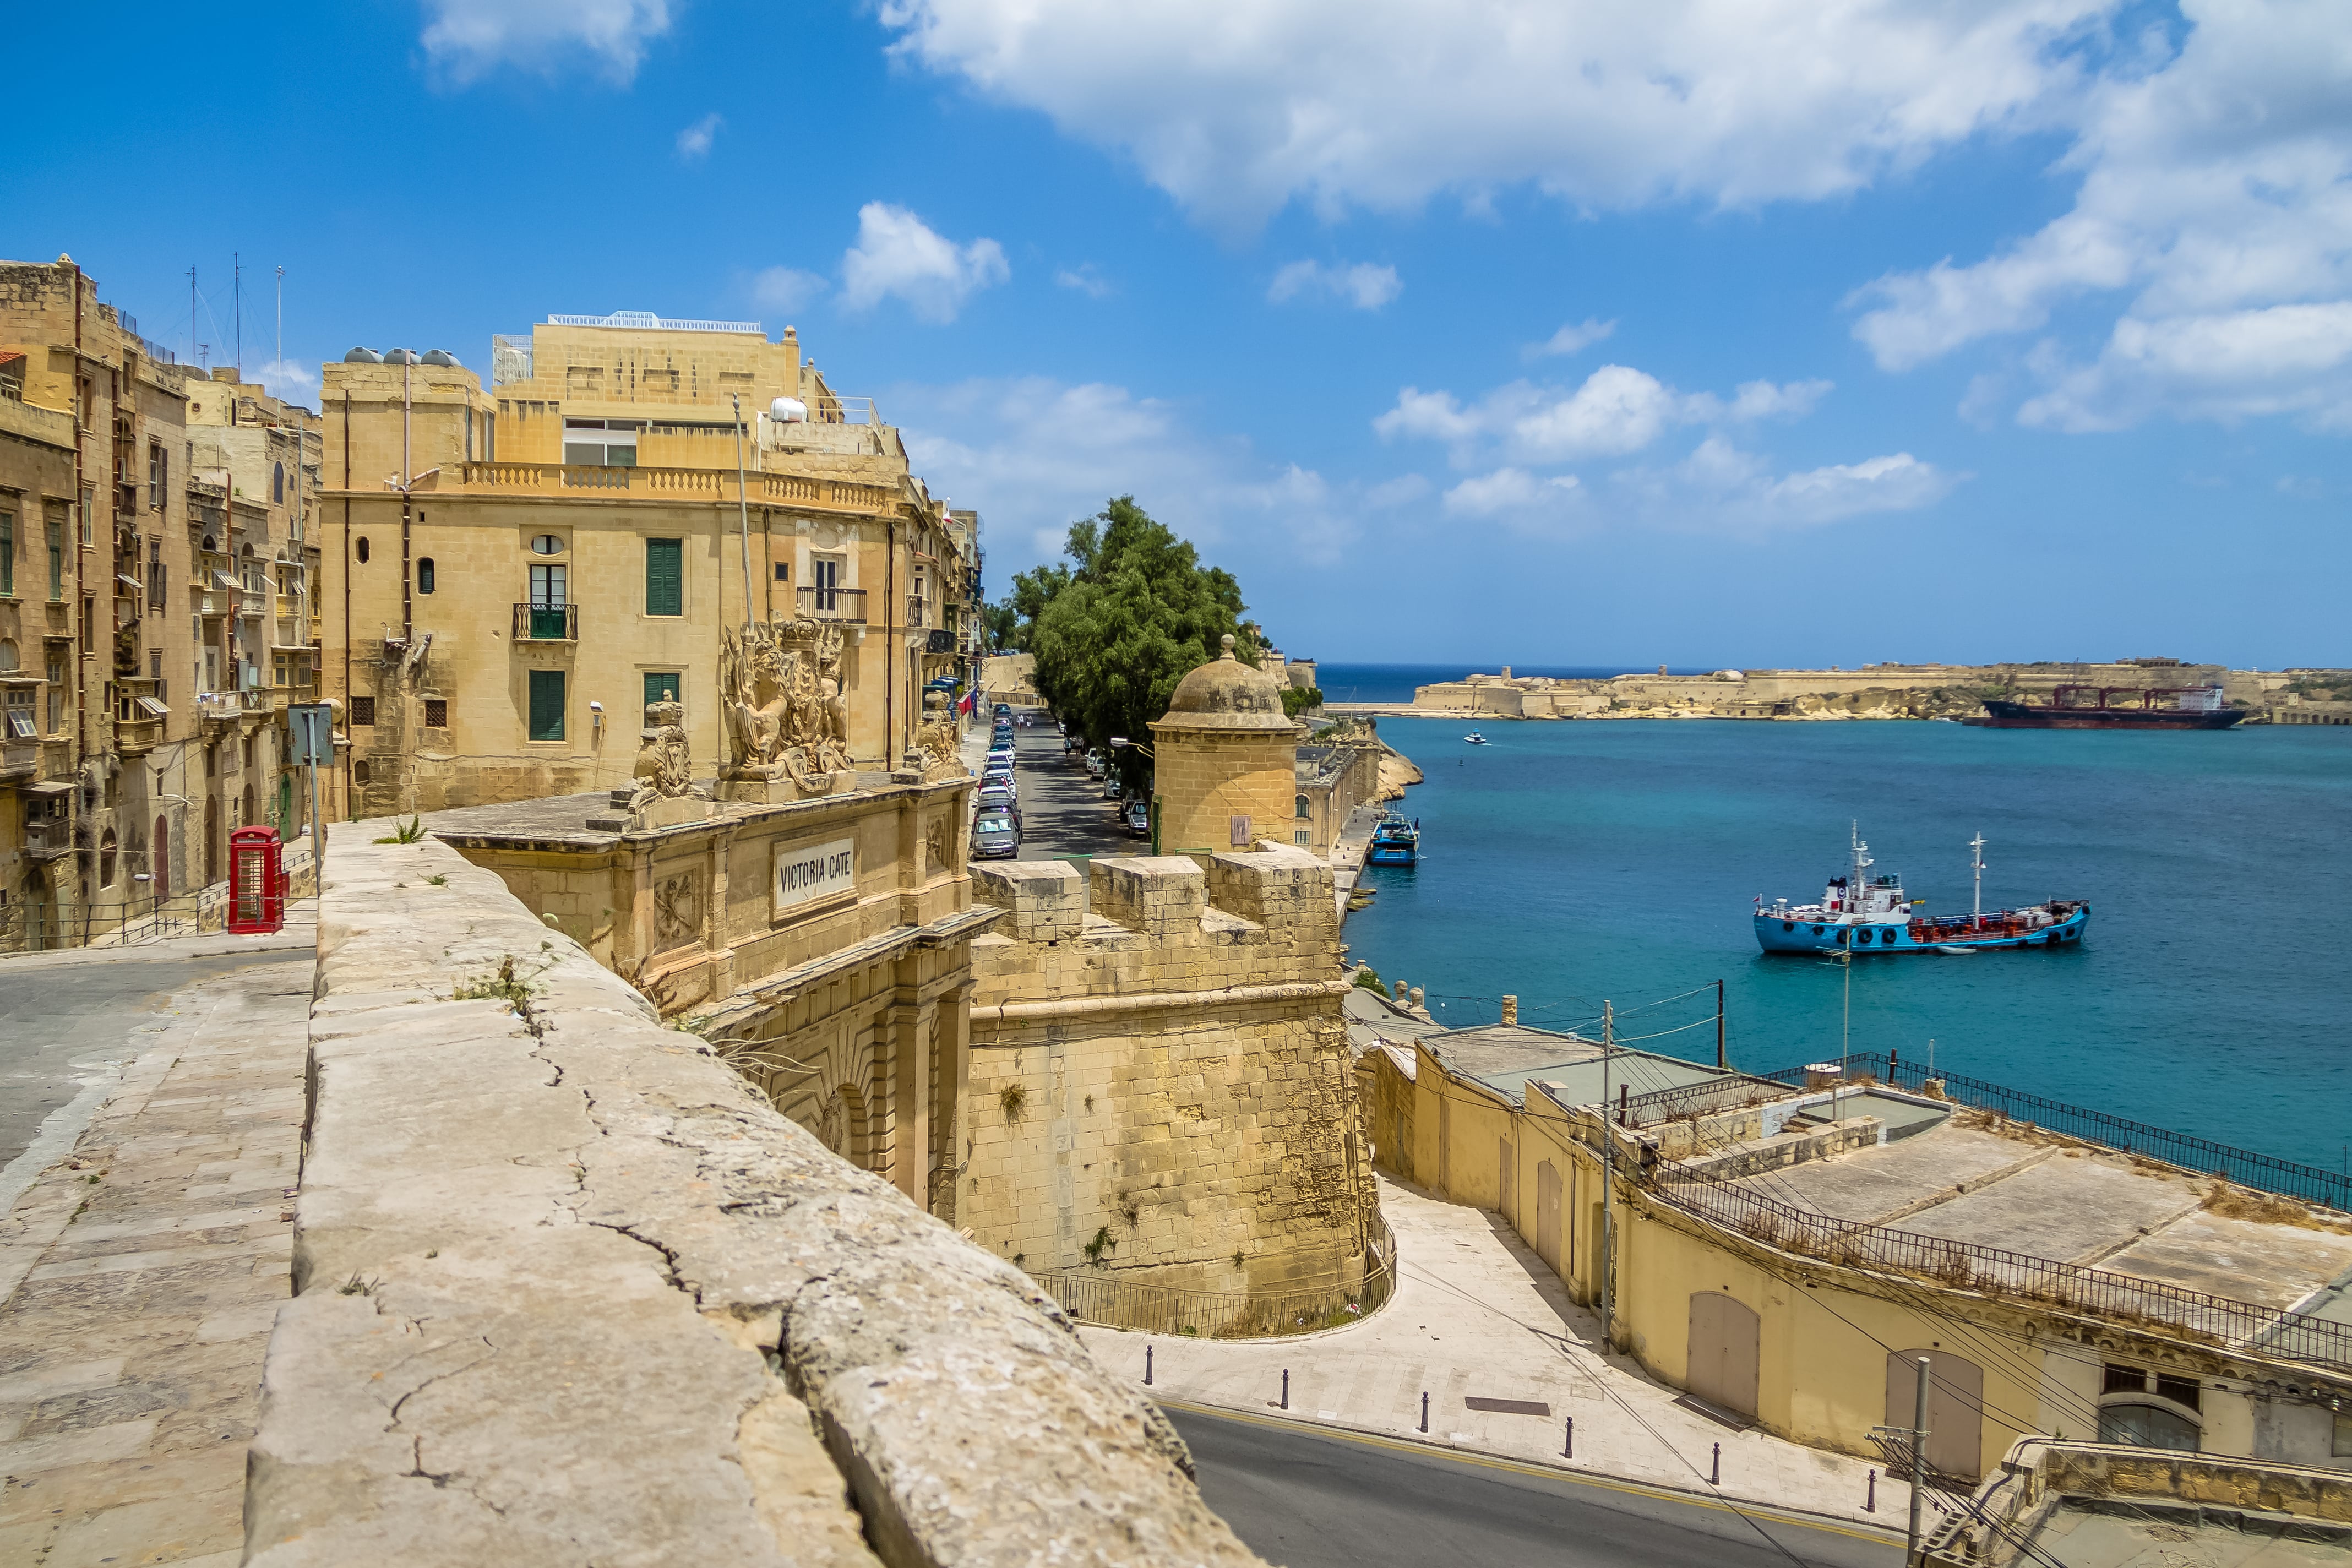 Lower Barrakka in Valletta